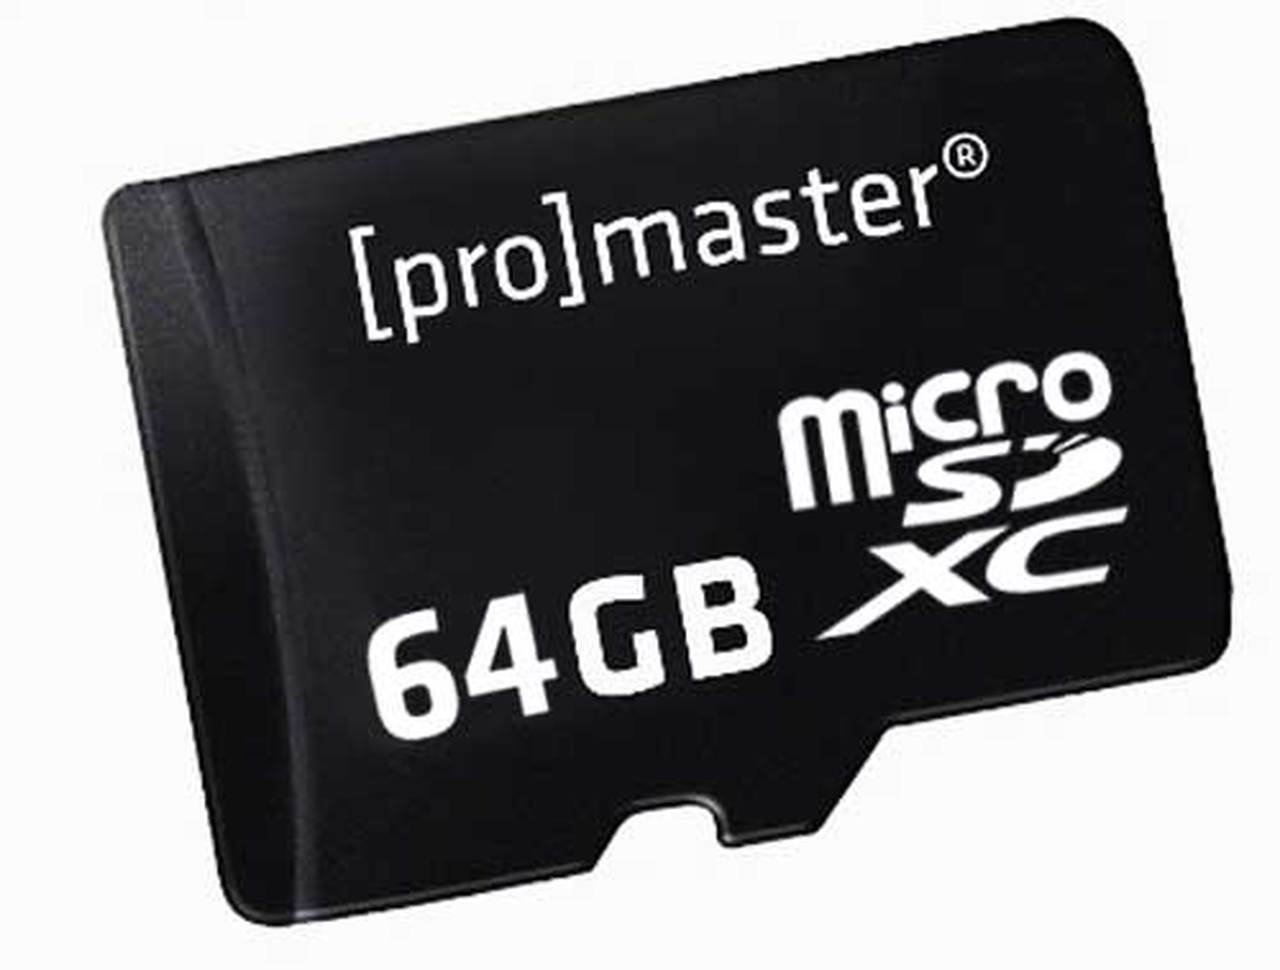 Promaster 5839 64GB Micro SDXC (10)